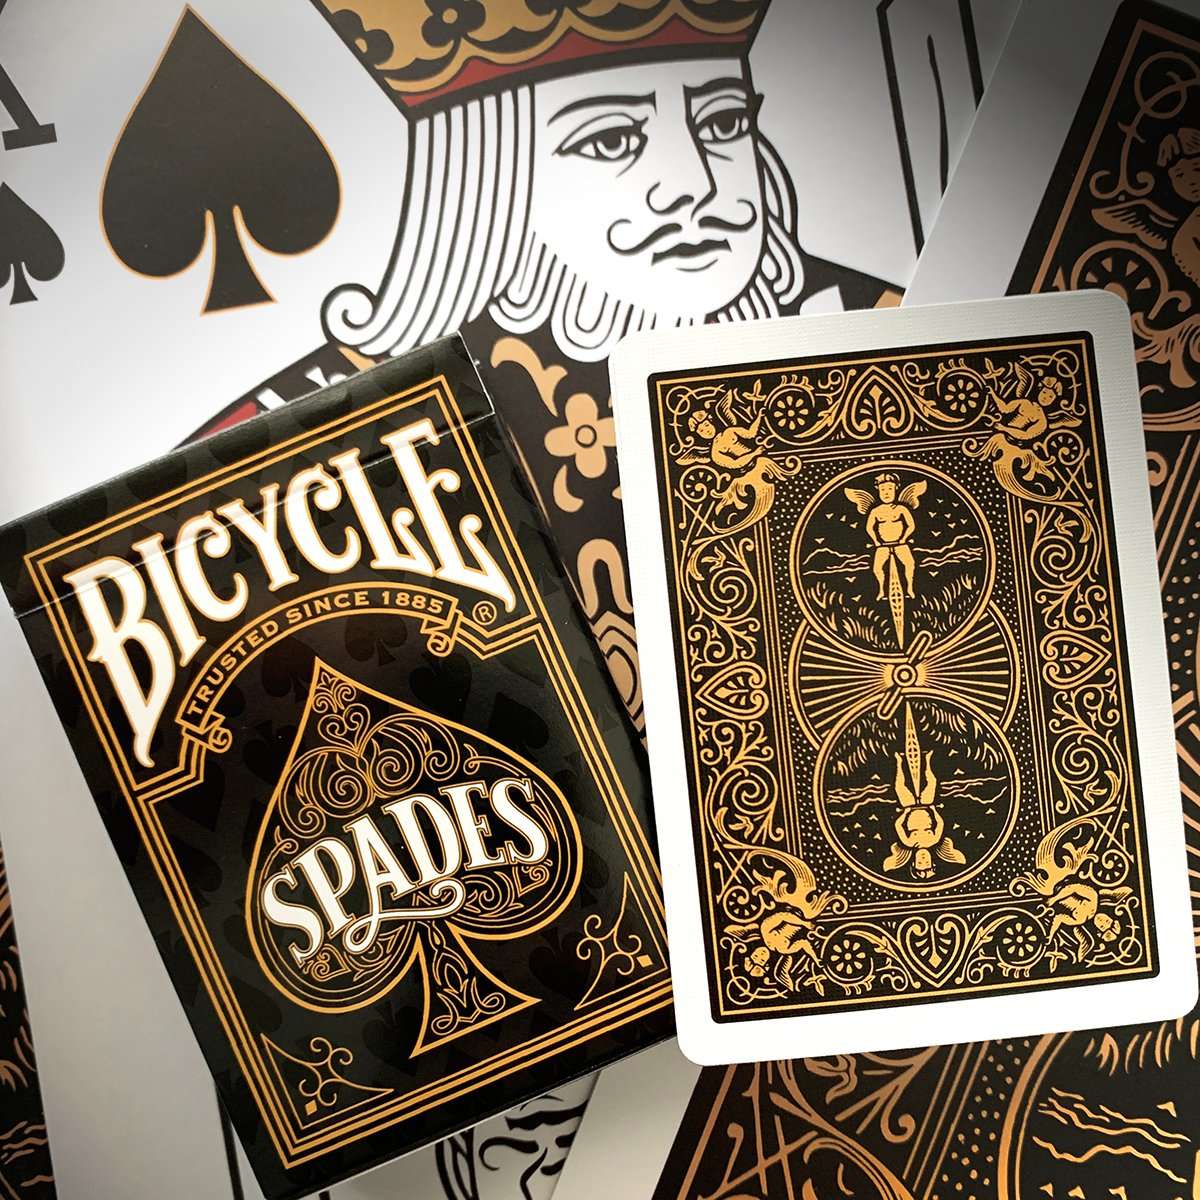 PlayingCardDecks.com-Spades Bicycle Playing Cards USPCC